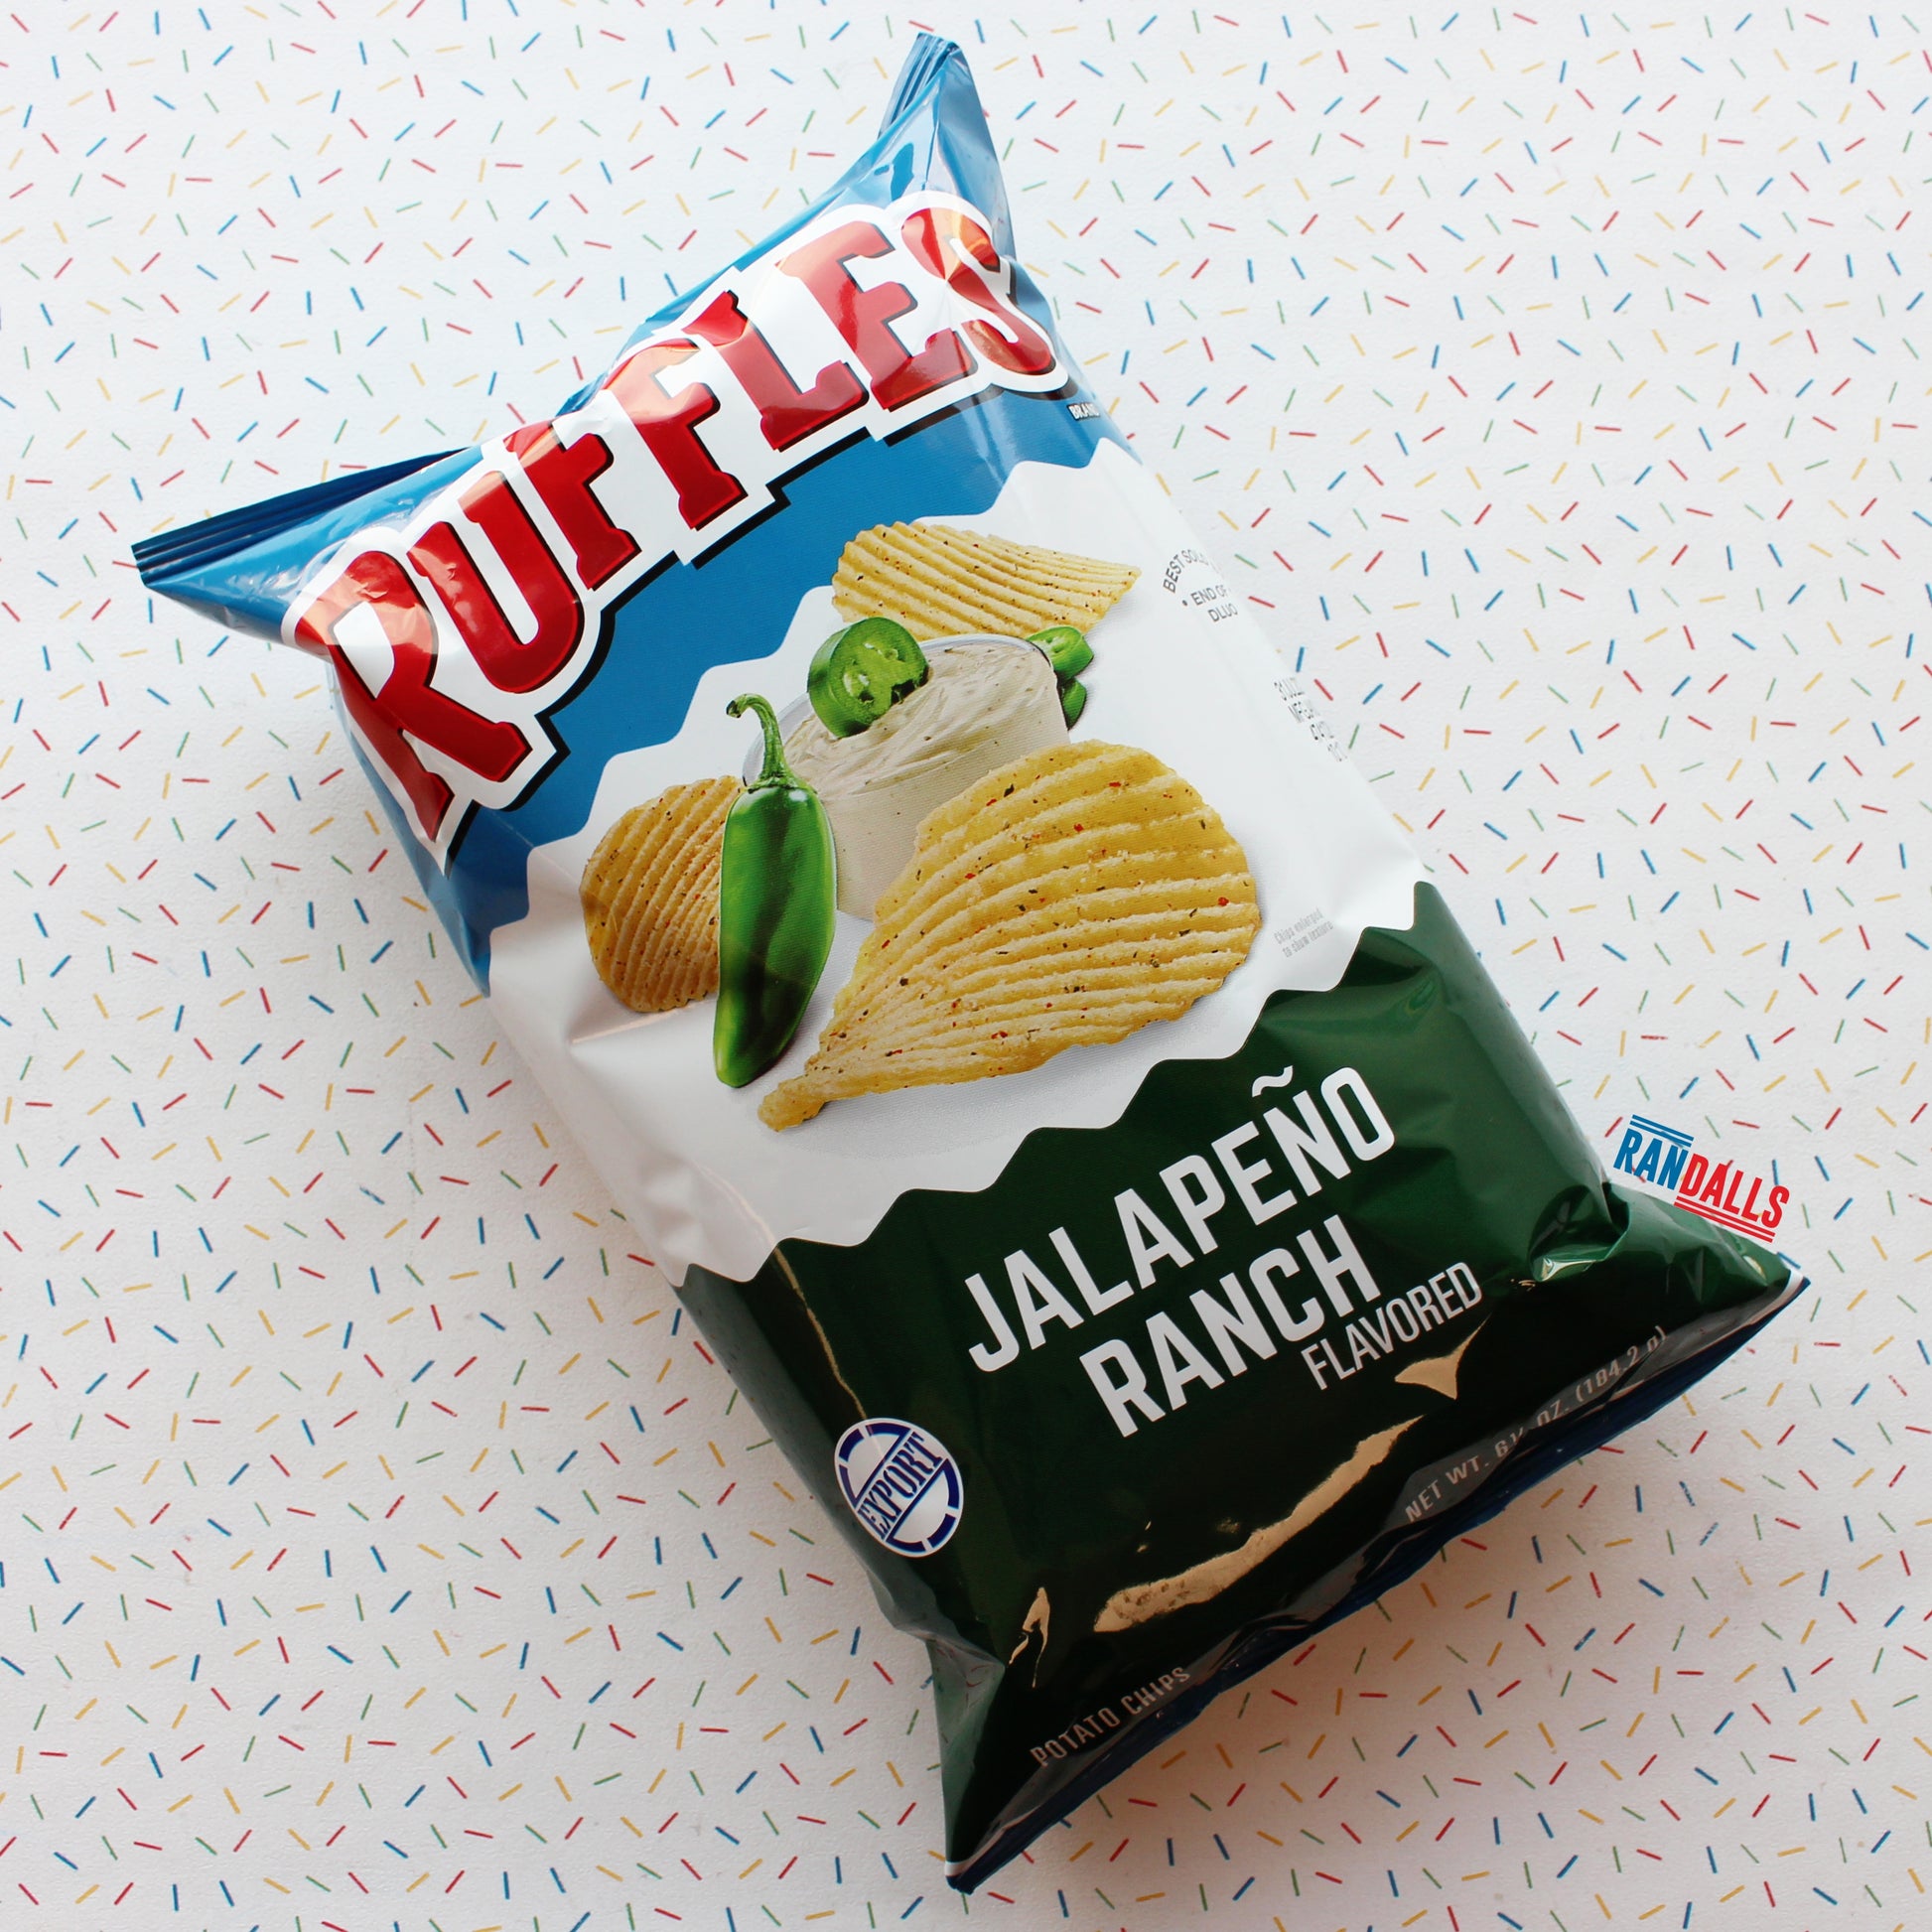 ruffles jalapeno ranch crisps, chips, ridged crisps, ridge, cheese, potato, usa, randalls